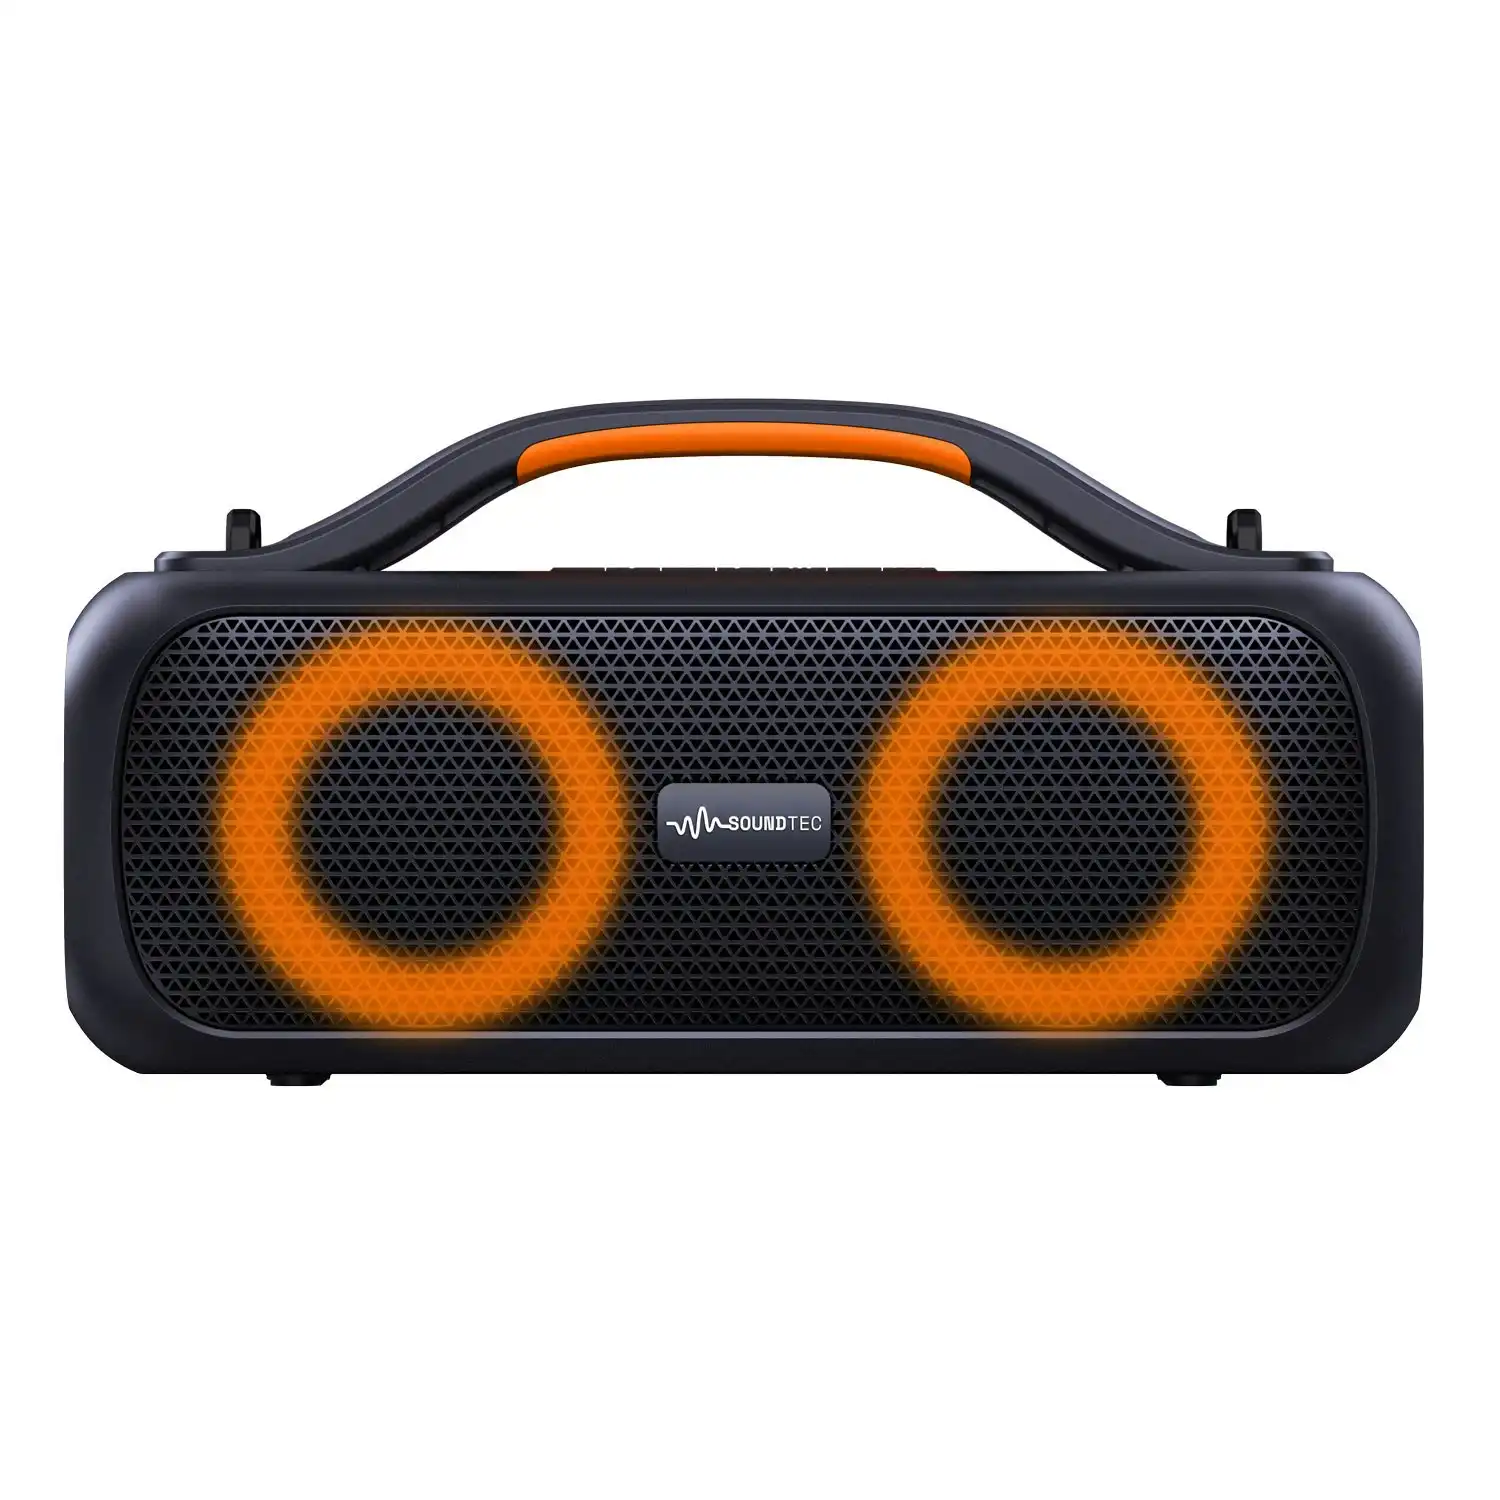 SoundTec 2.0 CH Mini Boombox Outdoor Portable Wireless Bluetooth IPX5